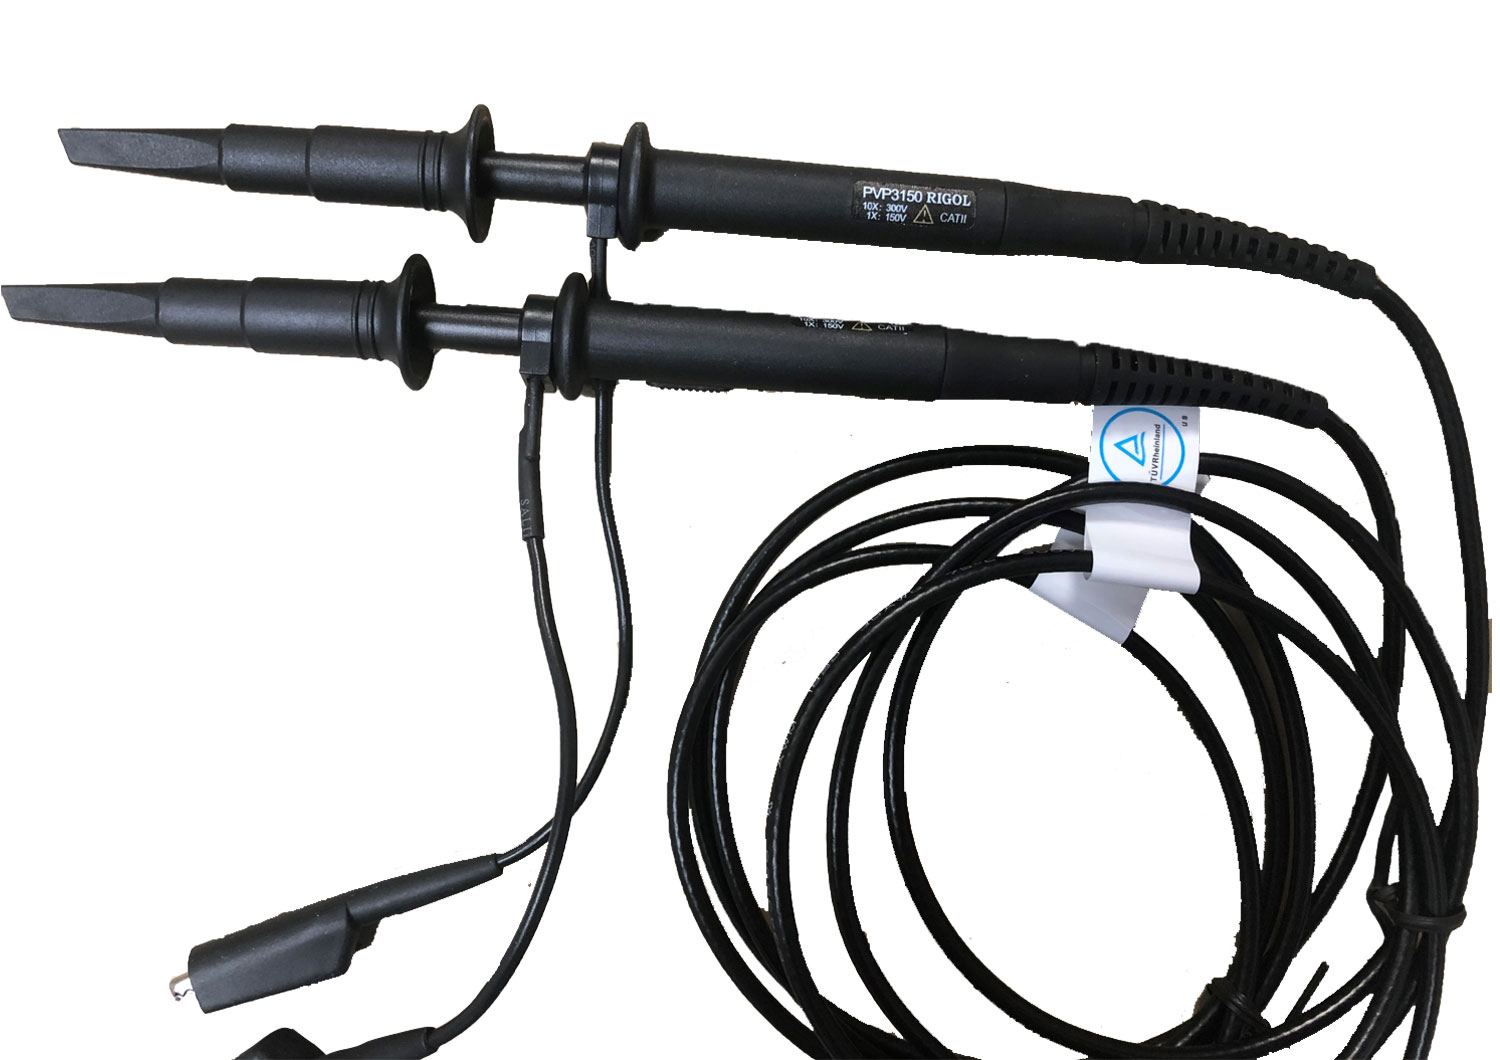 Brand New! Qty 2 RIGOL PVP2150 Passive Oscilloscope Probe Kit all Accessories 